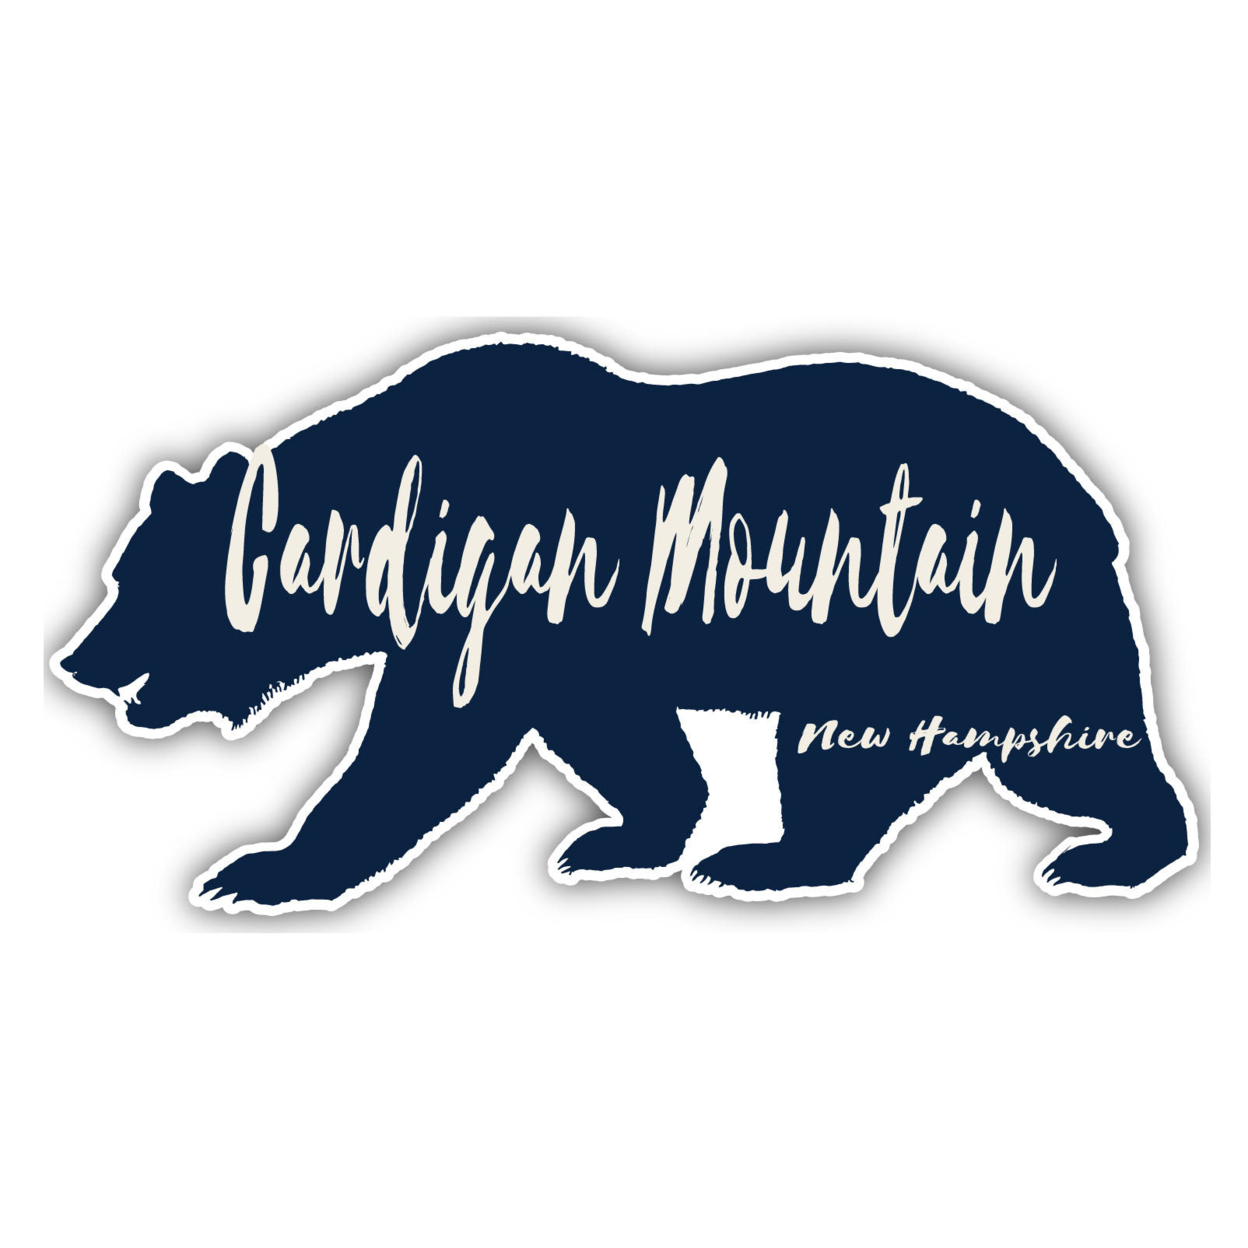 Cardigan Mountain New Hampshire Souvenir Decorative Stickers (Choose Theme And Size) - Single Unit, 8-Inch, Bear